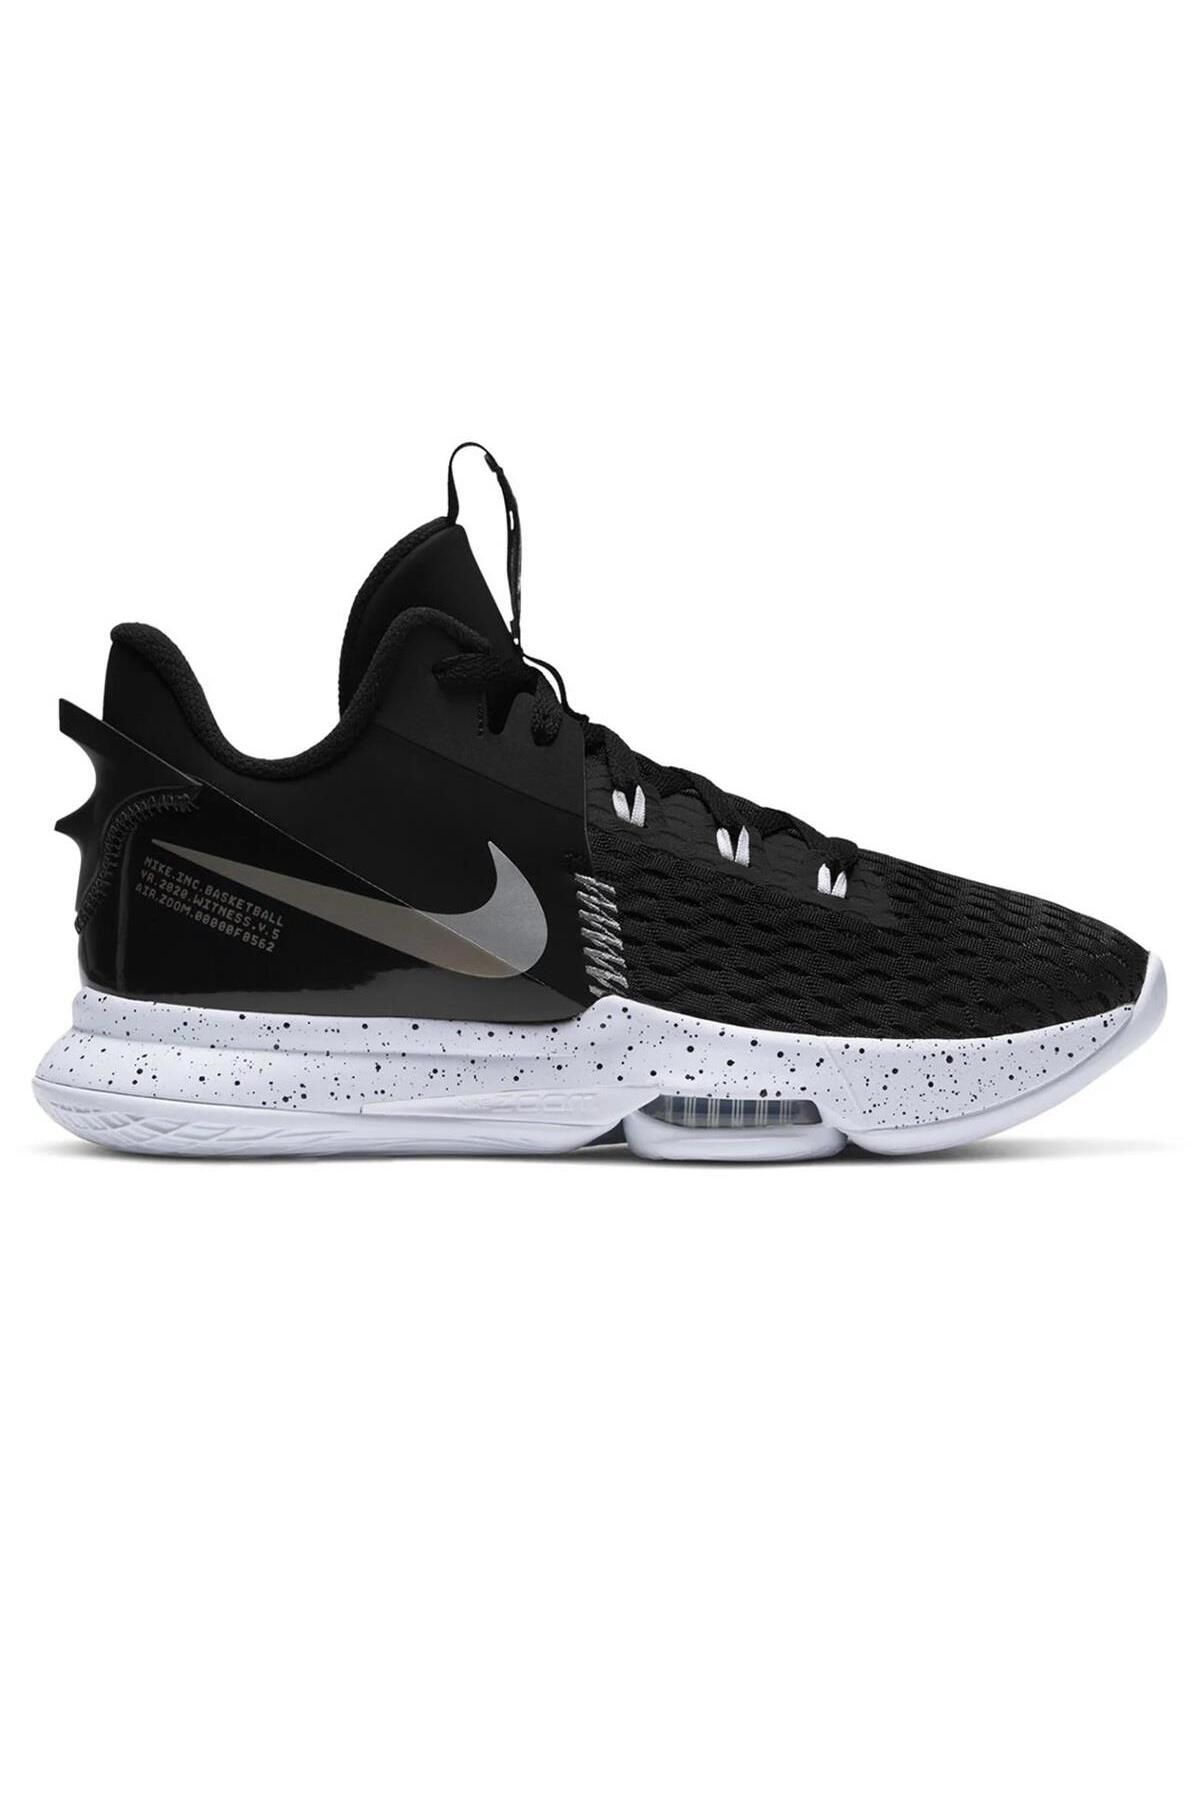 Nike Lebron Witness 5 Basketball Shoes Black Basketbol Ayakkabısı Siyah